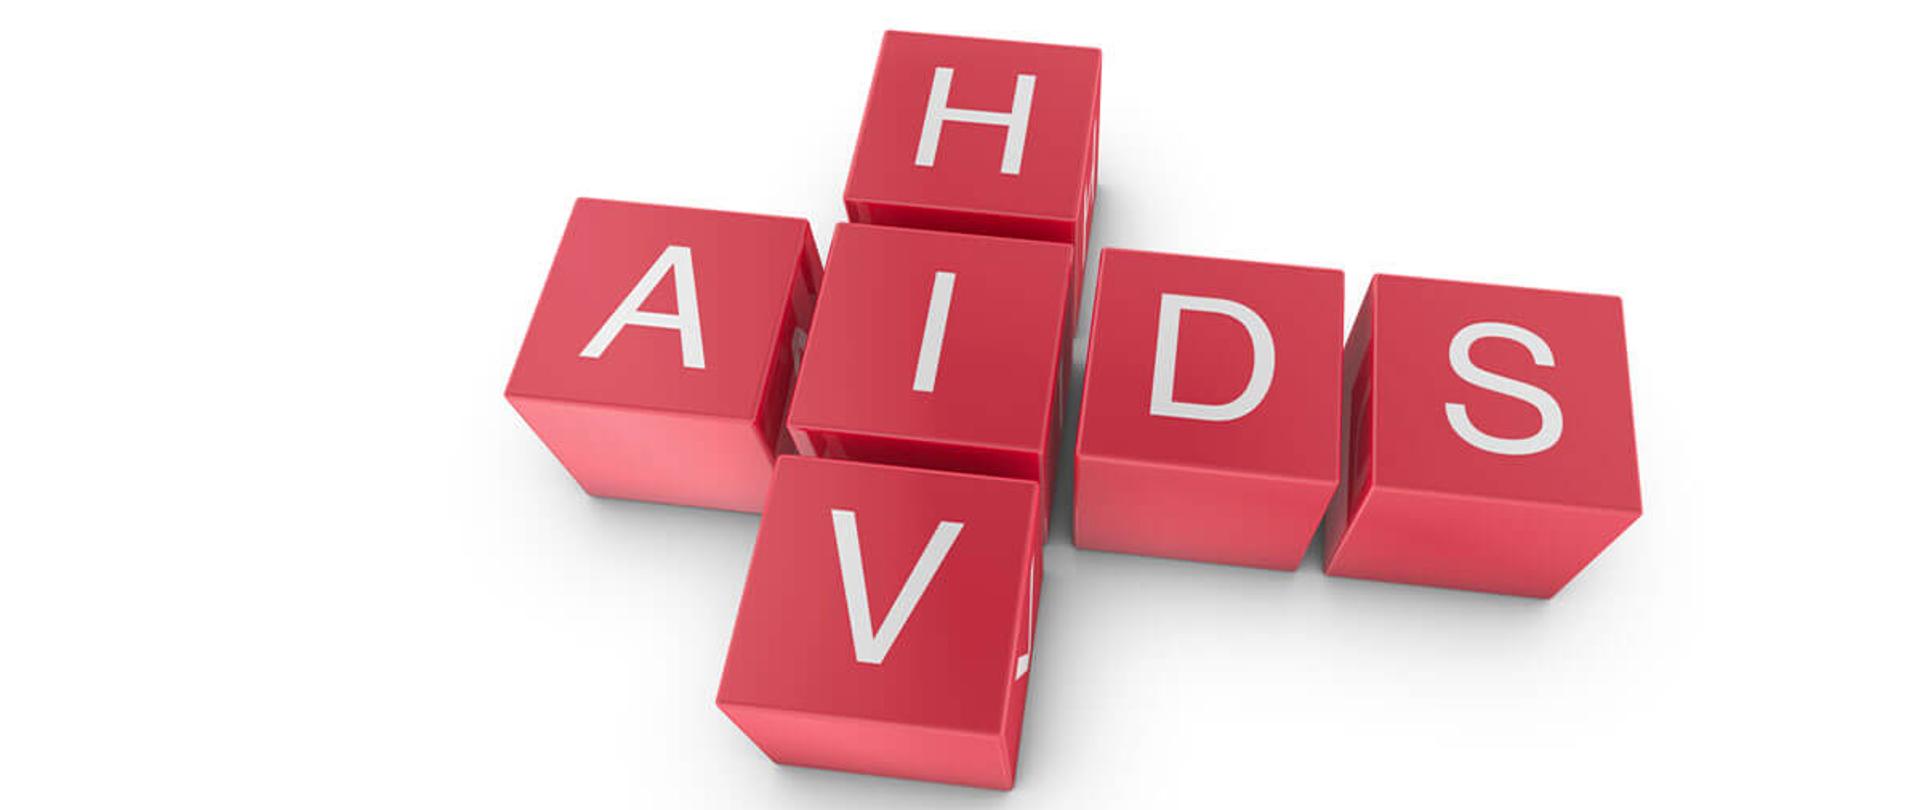 AIDS - HIV